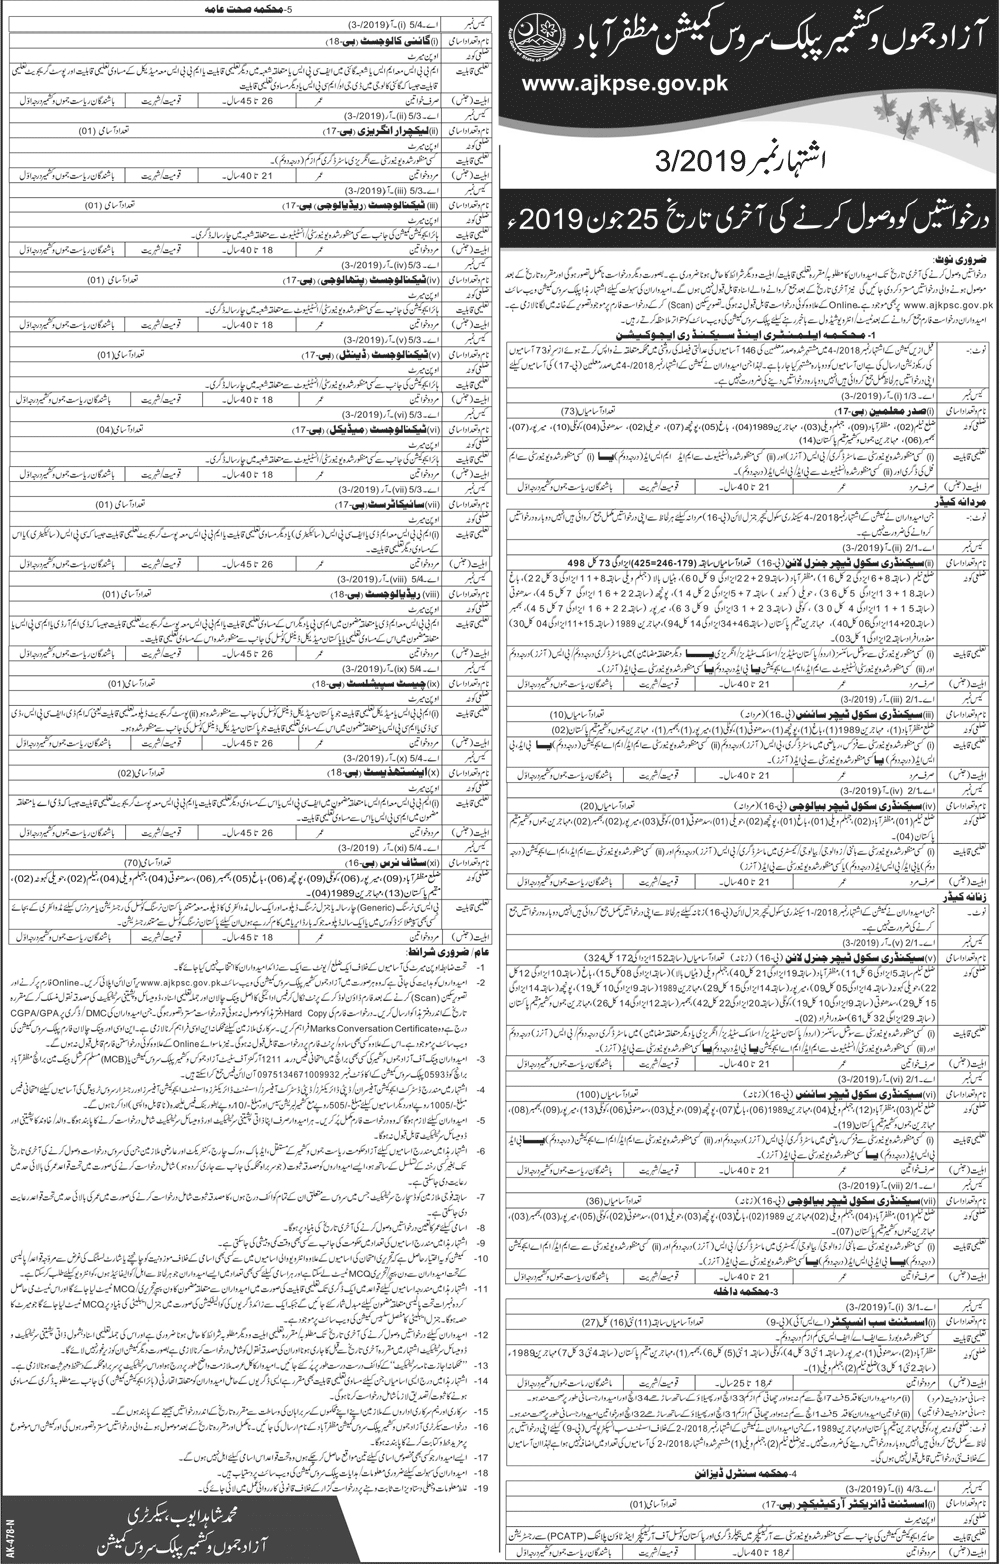 Azad Jammu and Kashmir Public Service Commission (AJKPSC) jobs 2019